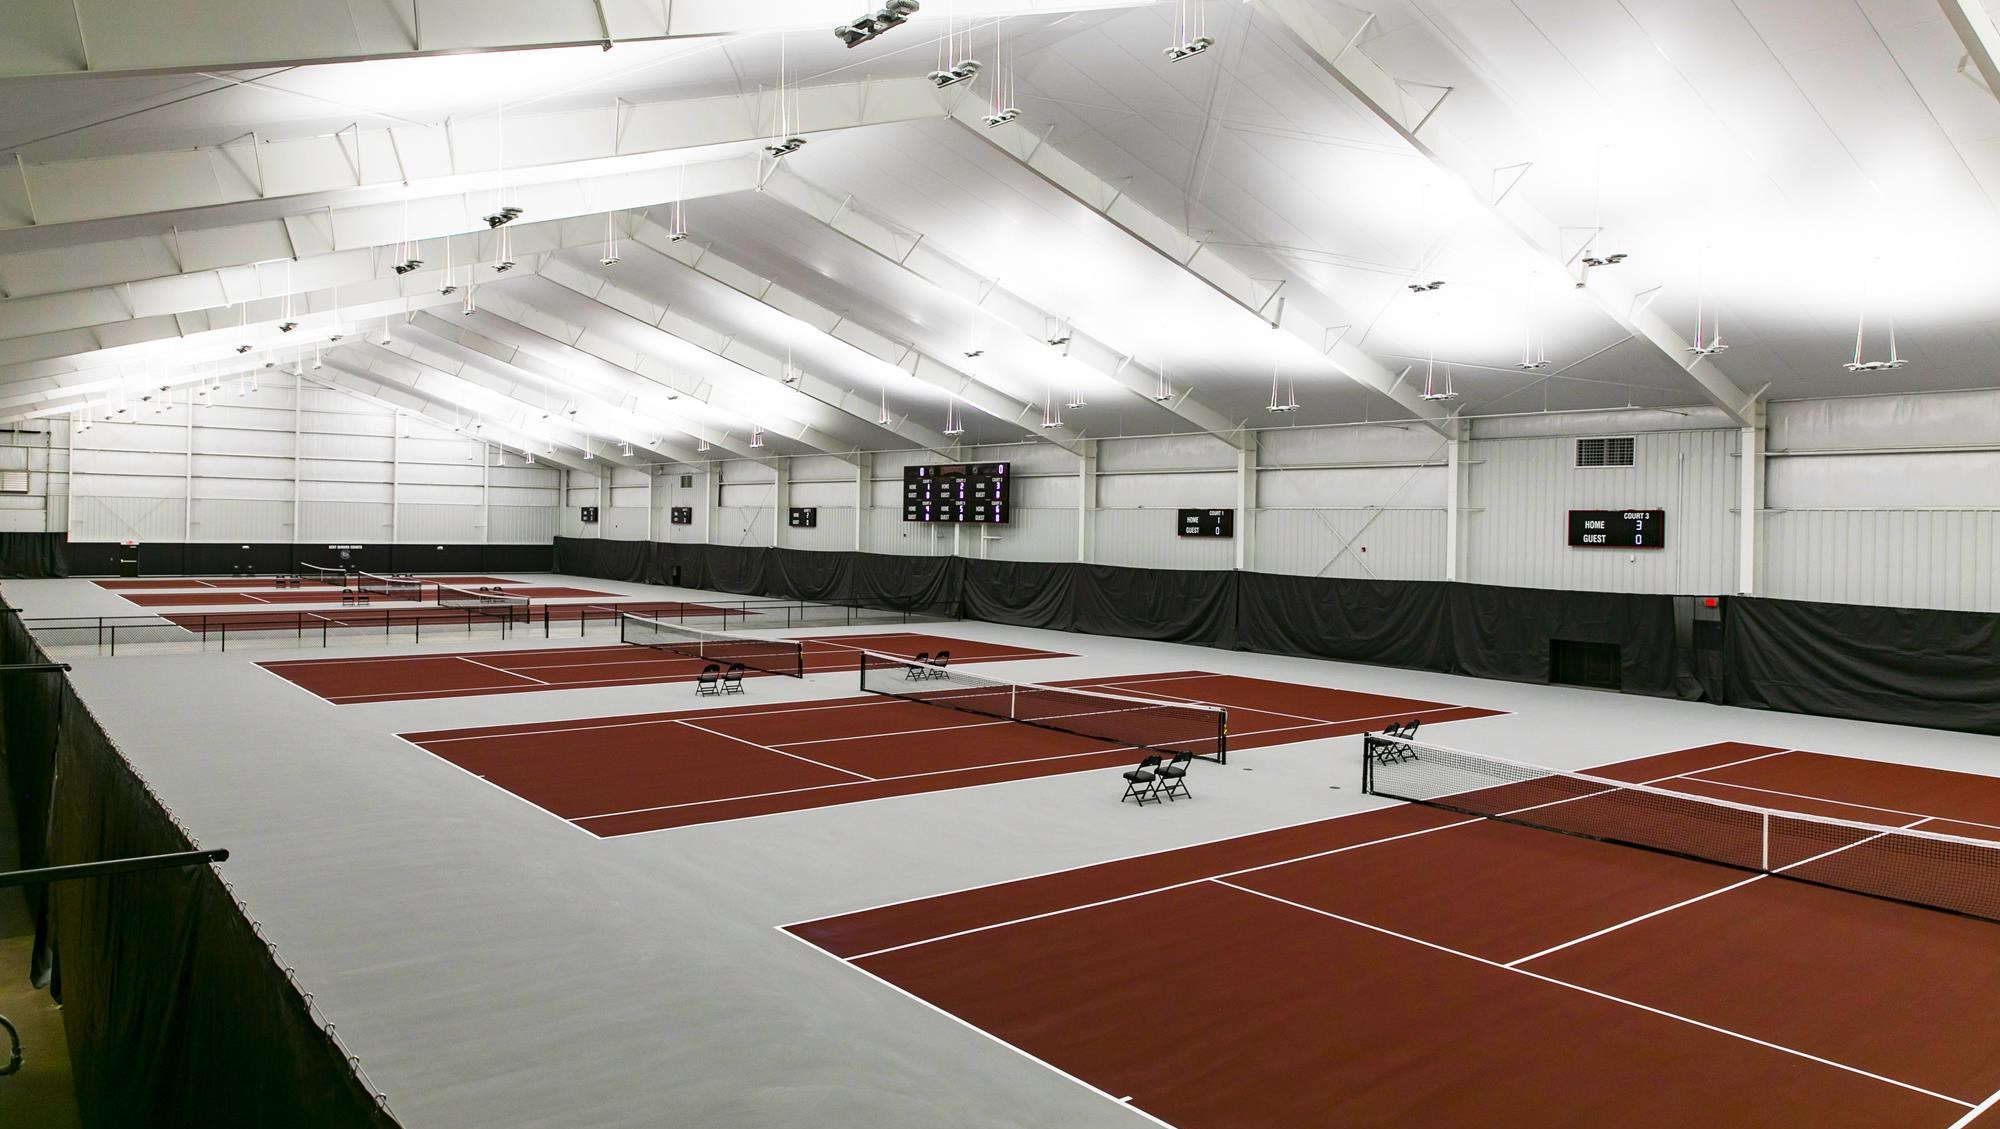 9/24/21 - Indoor Tennis Center Dedication Ceremony